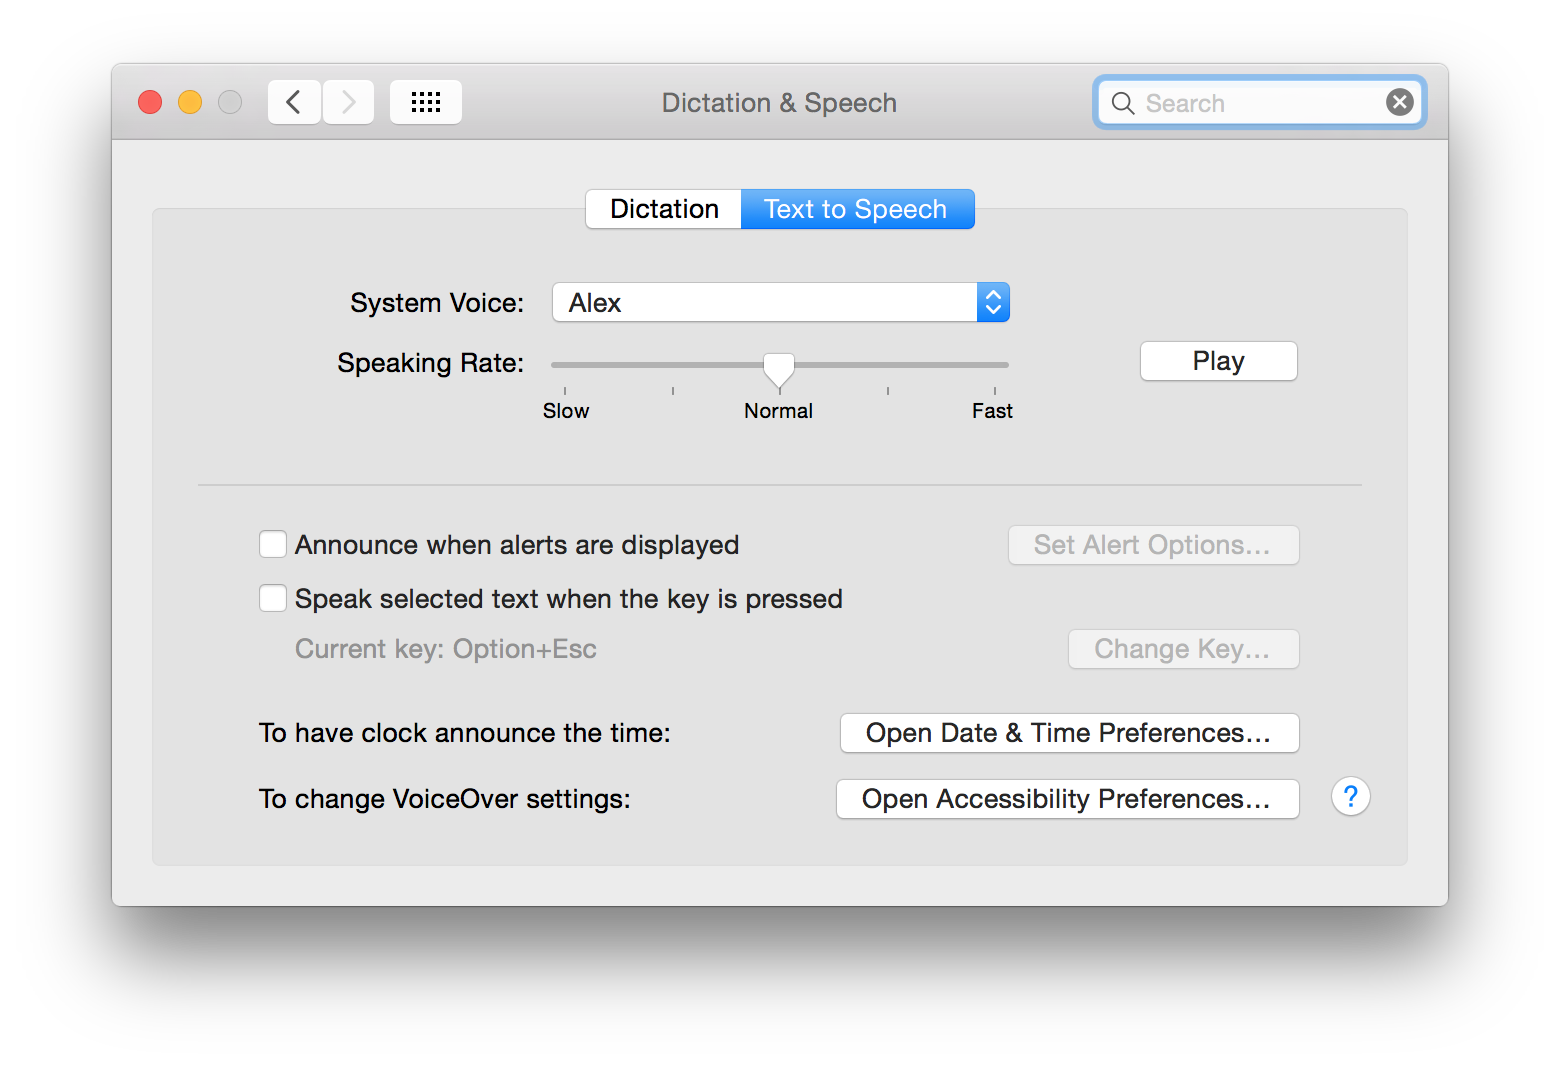 speech to text software for mac